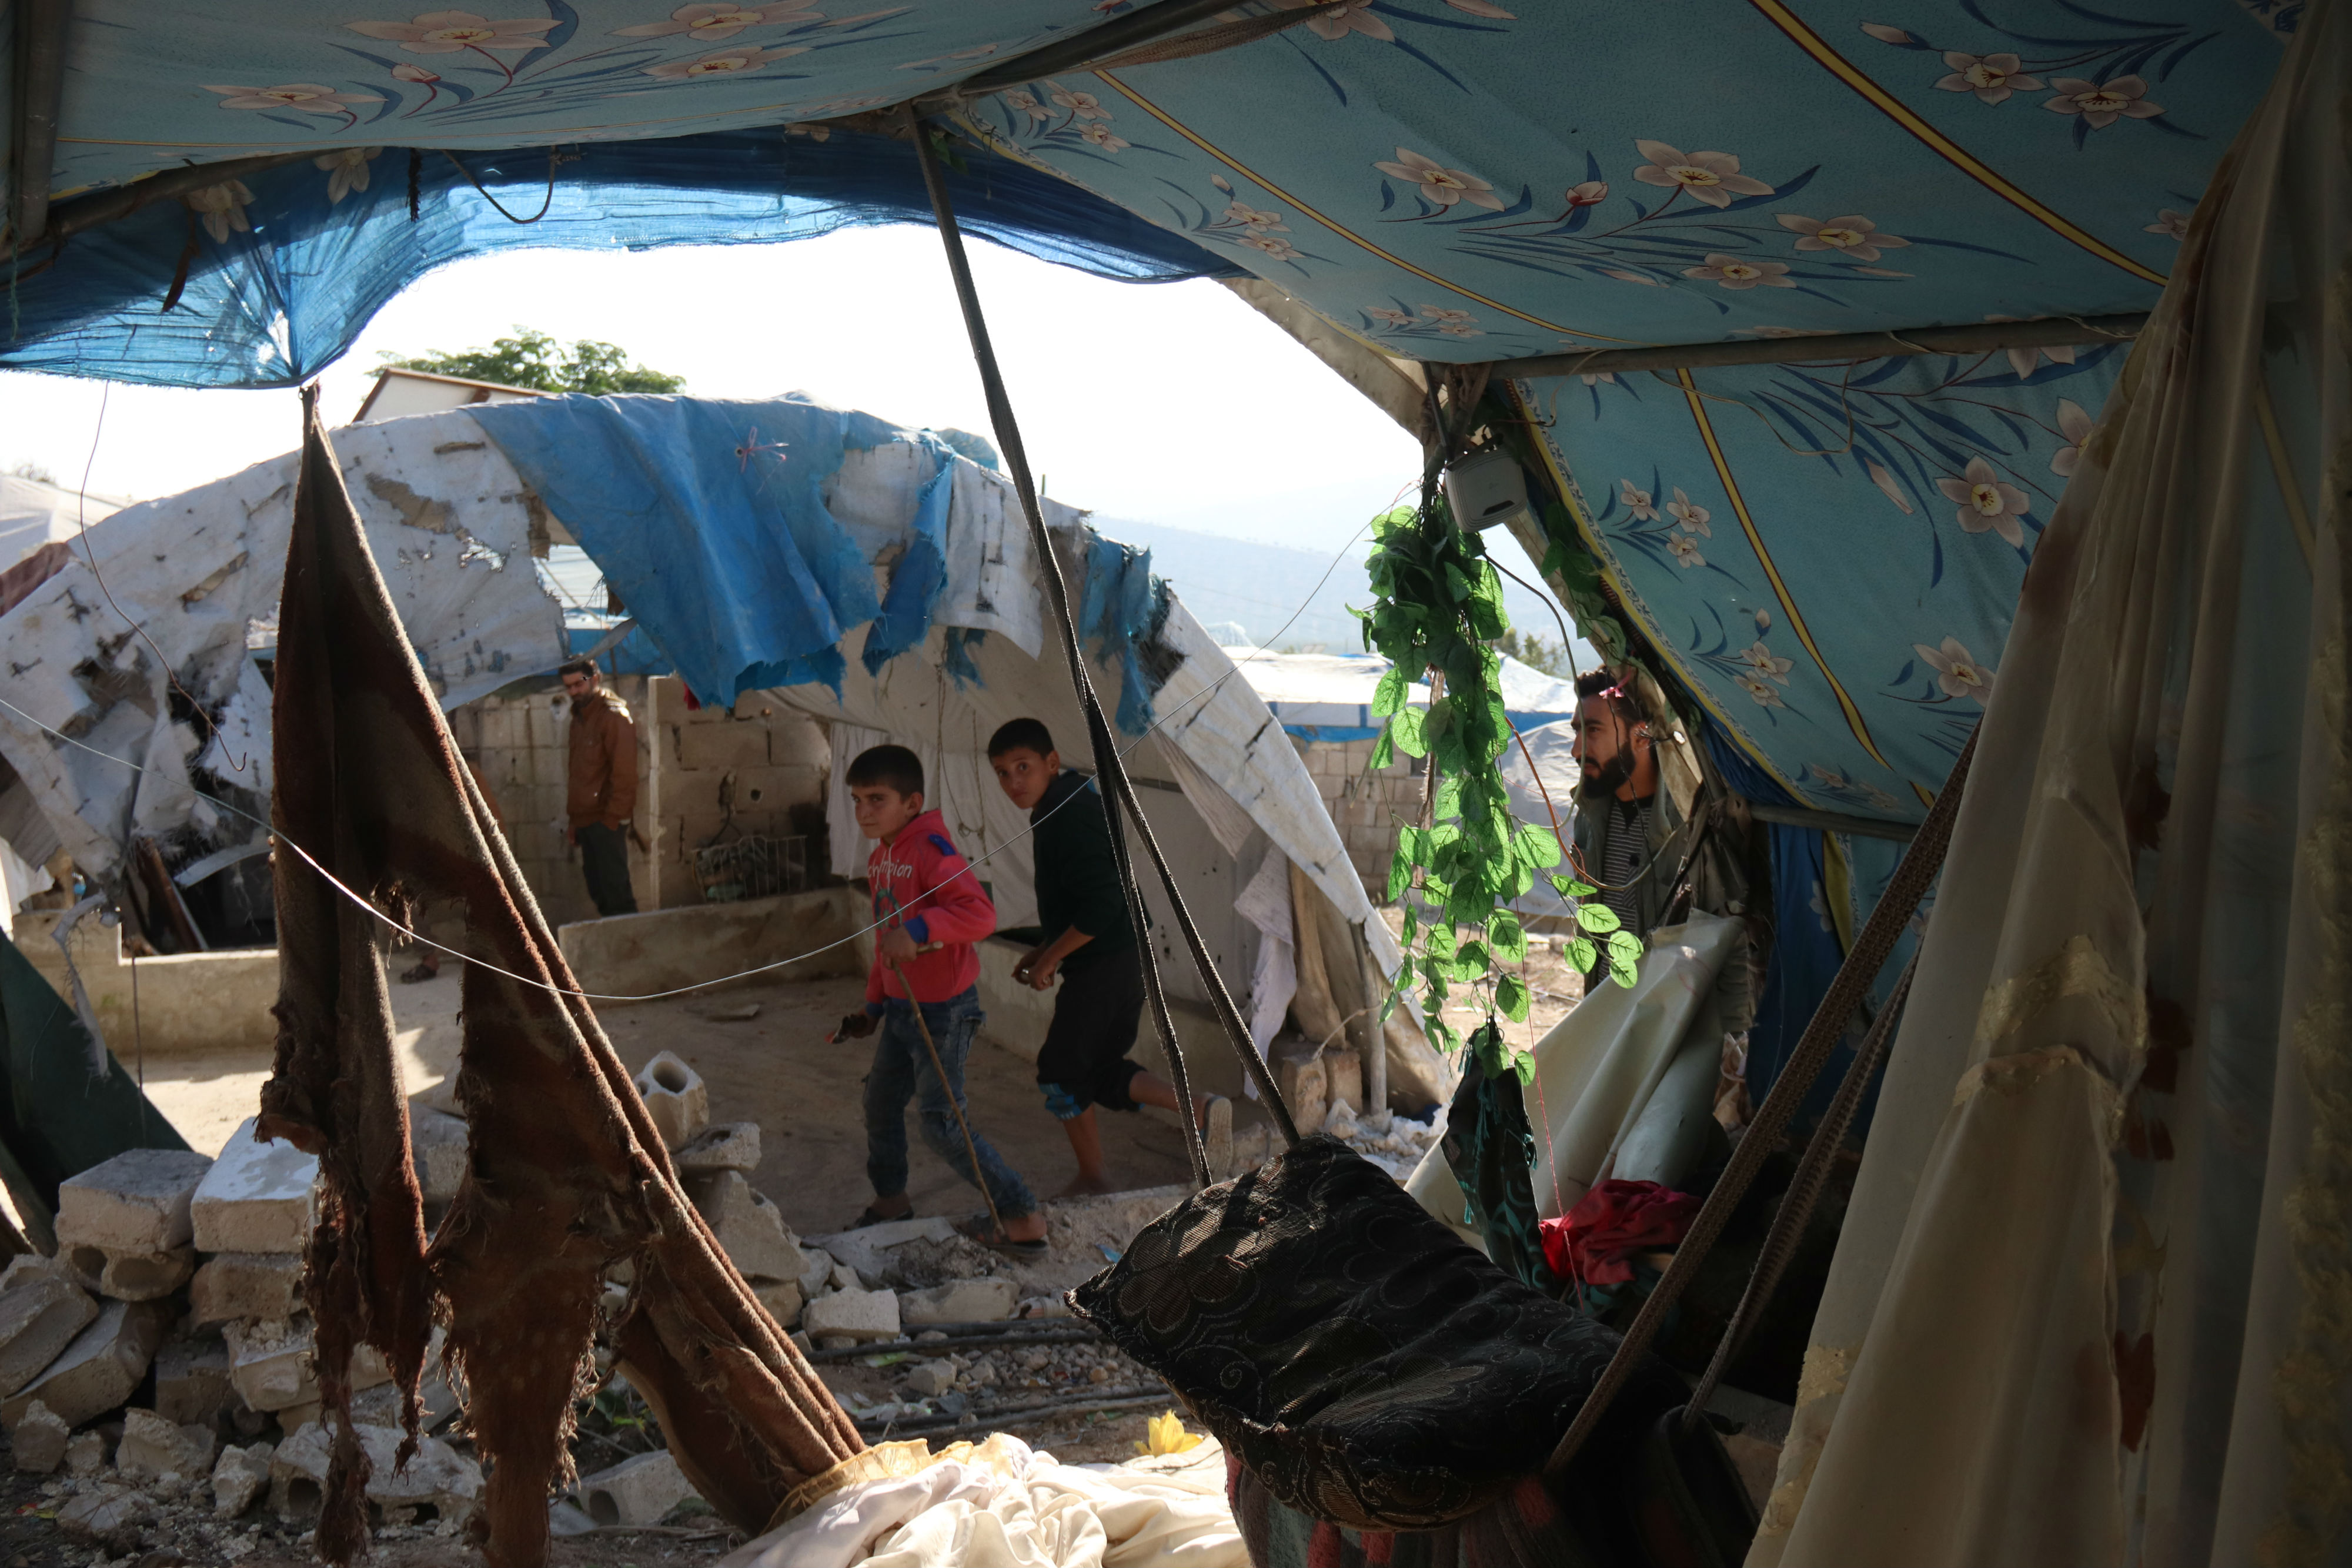 Children walk through the damaged camp in Syria's Qah (MEE/Muhammad Alhosy)